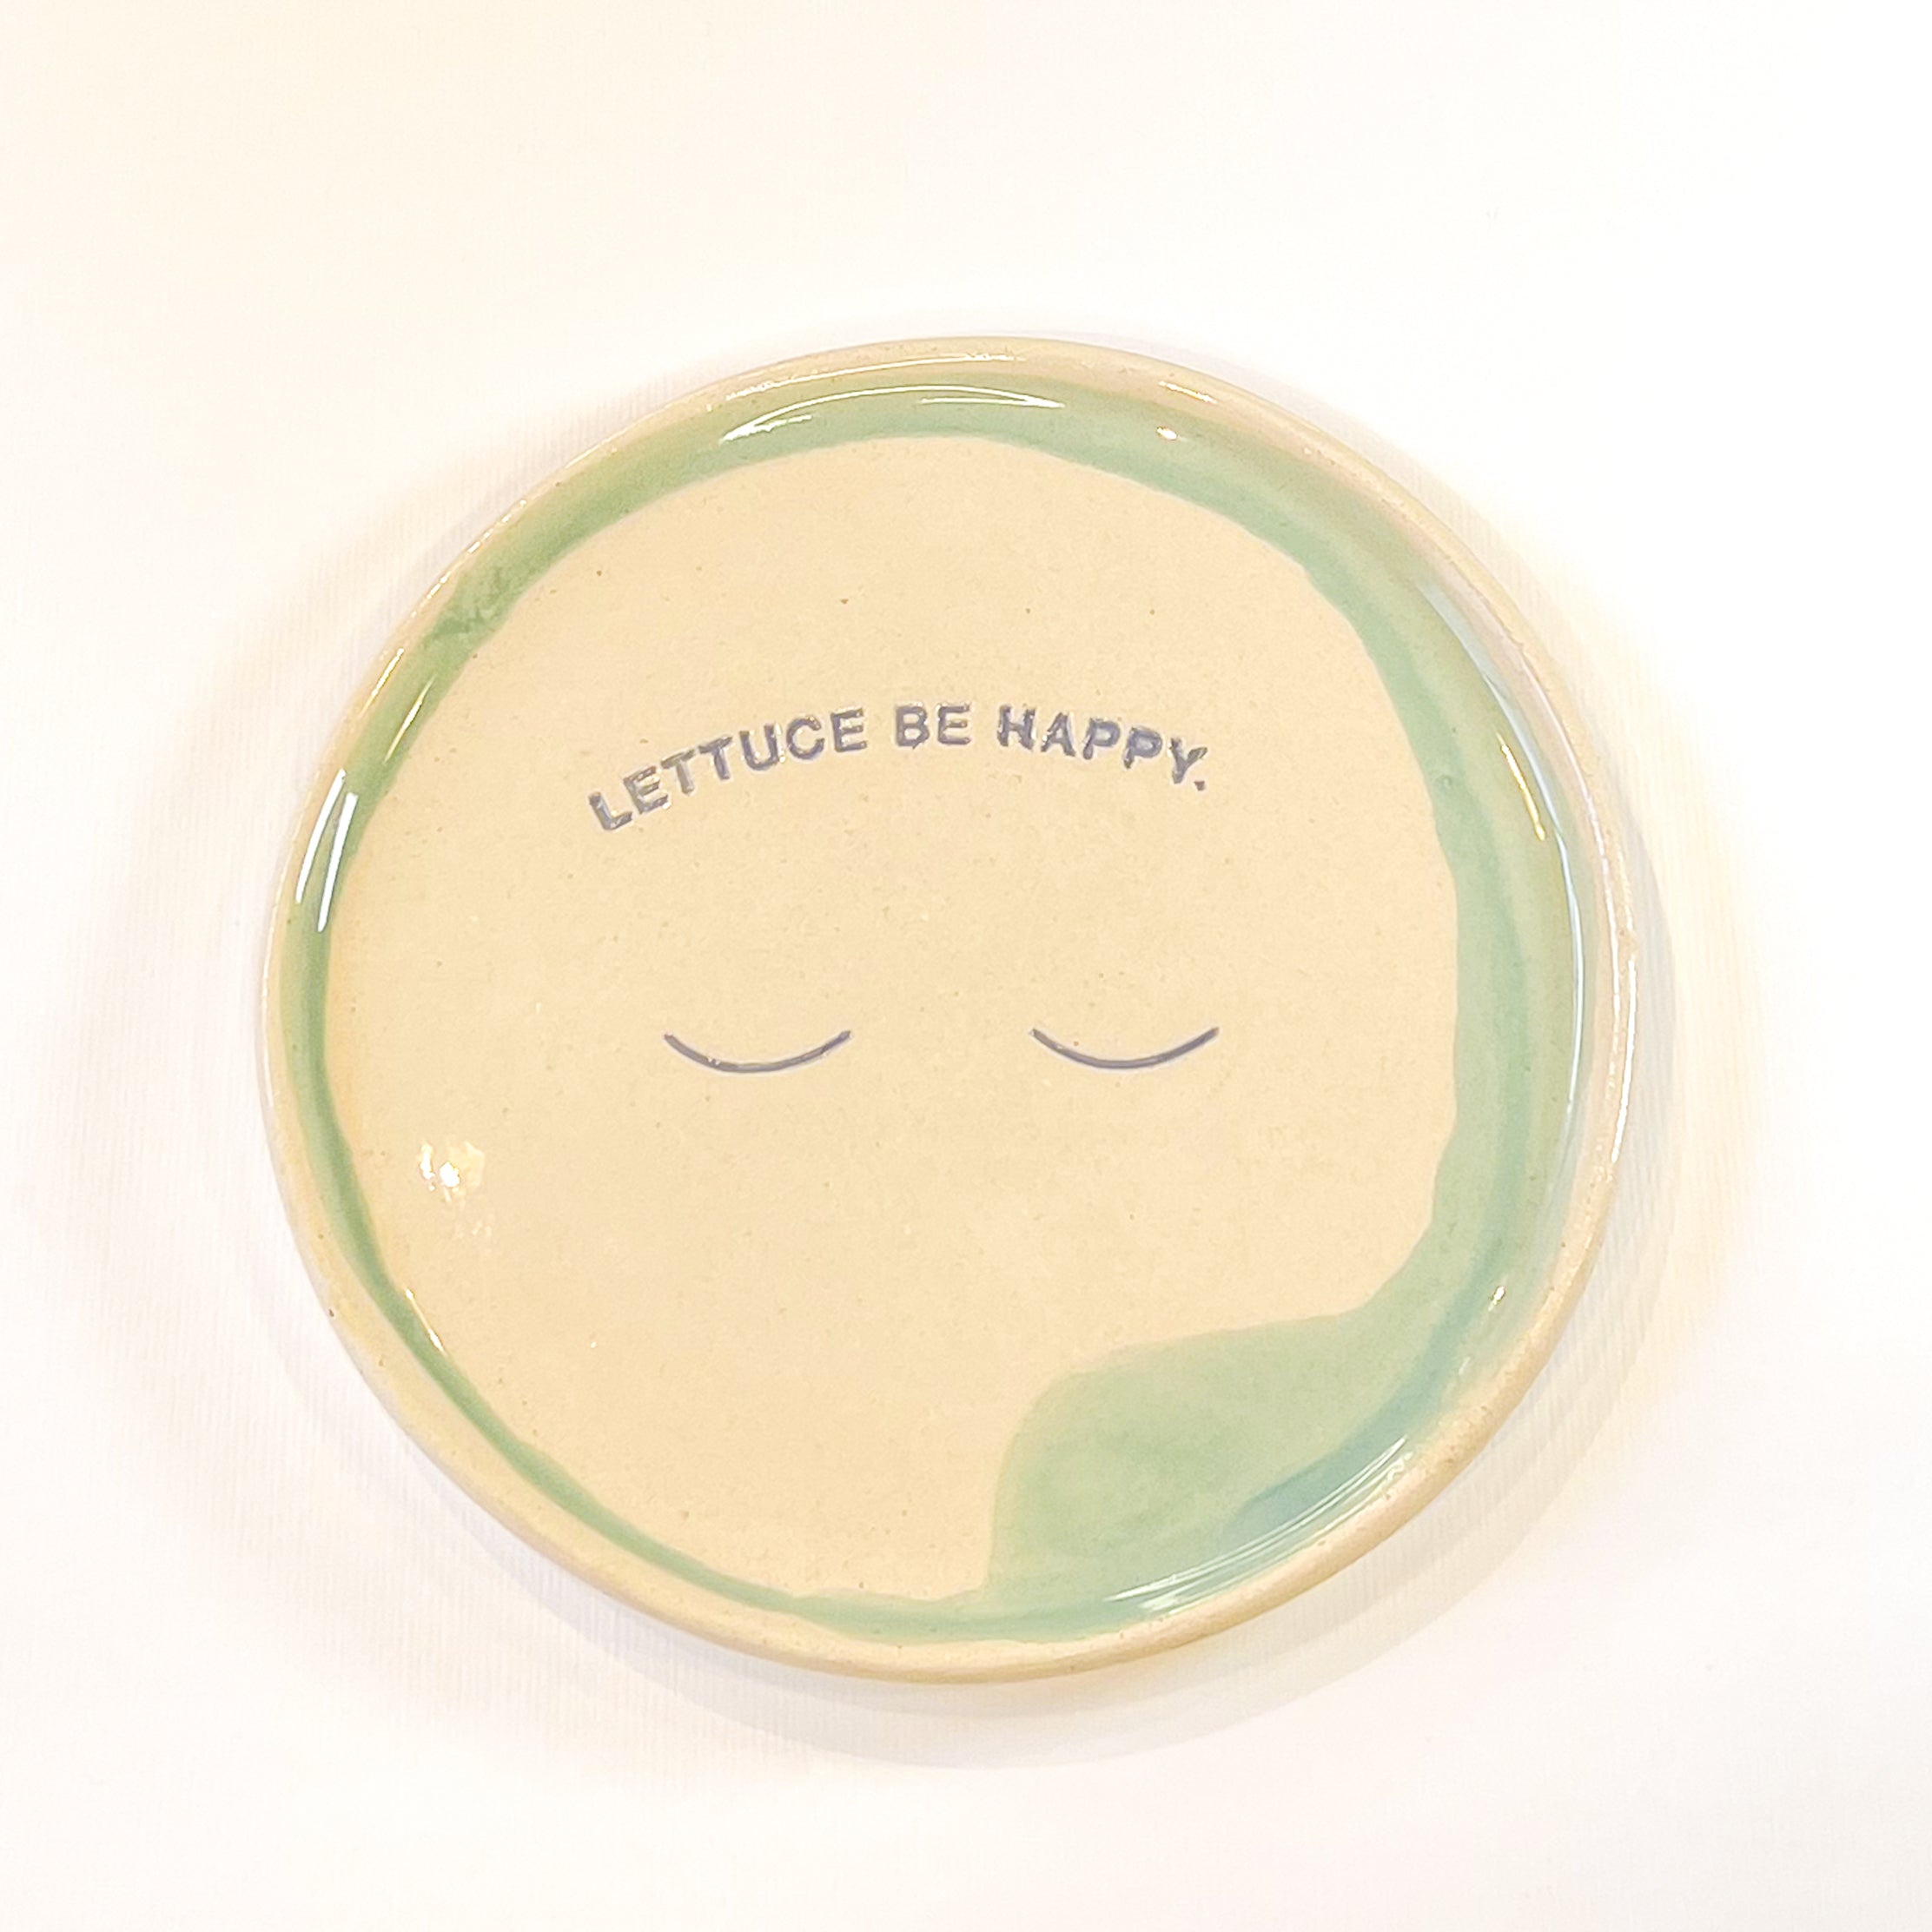 Plato Postrero - Lettuce be happy